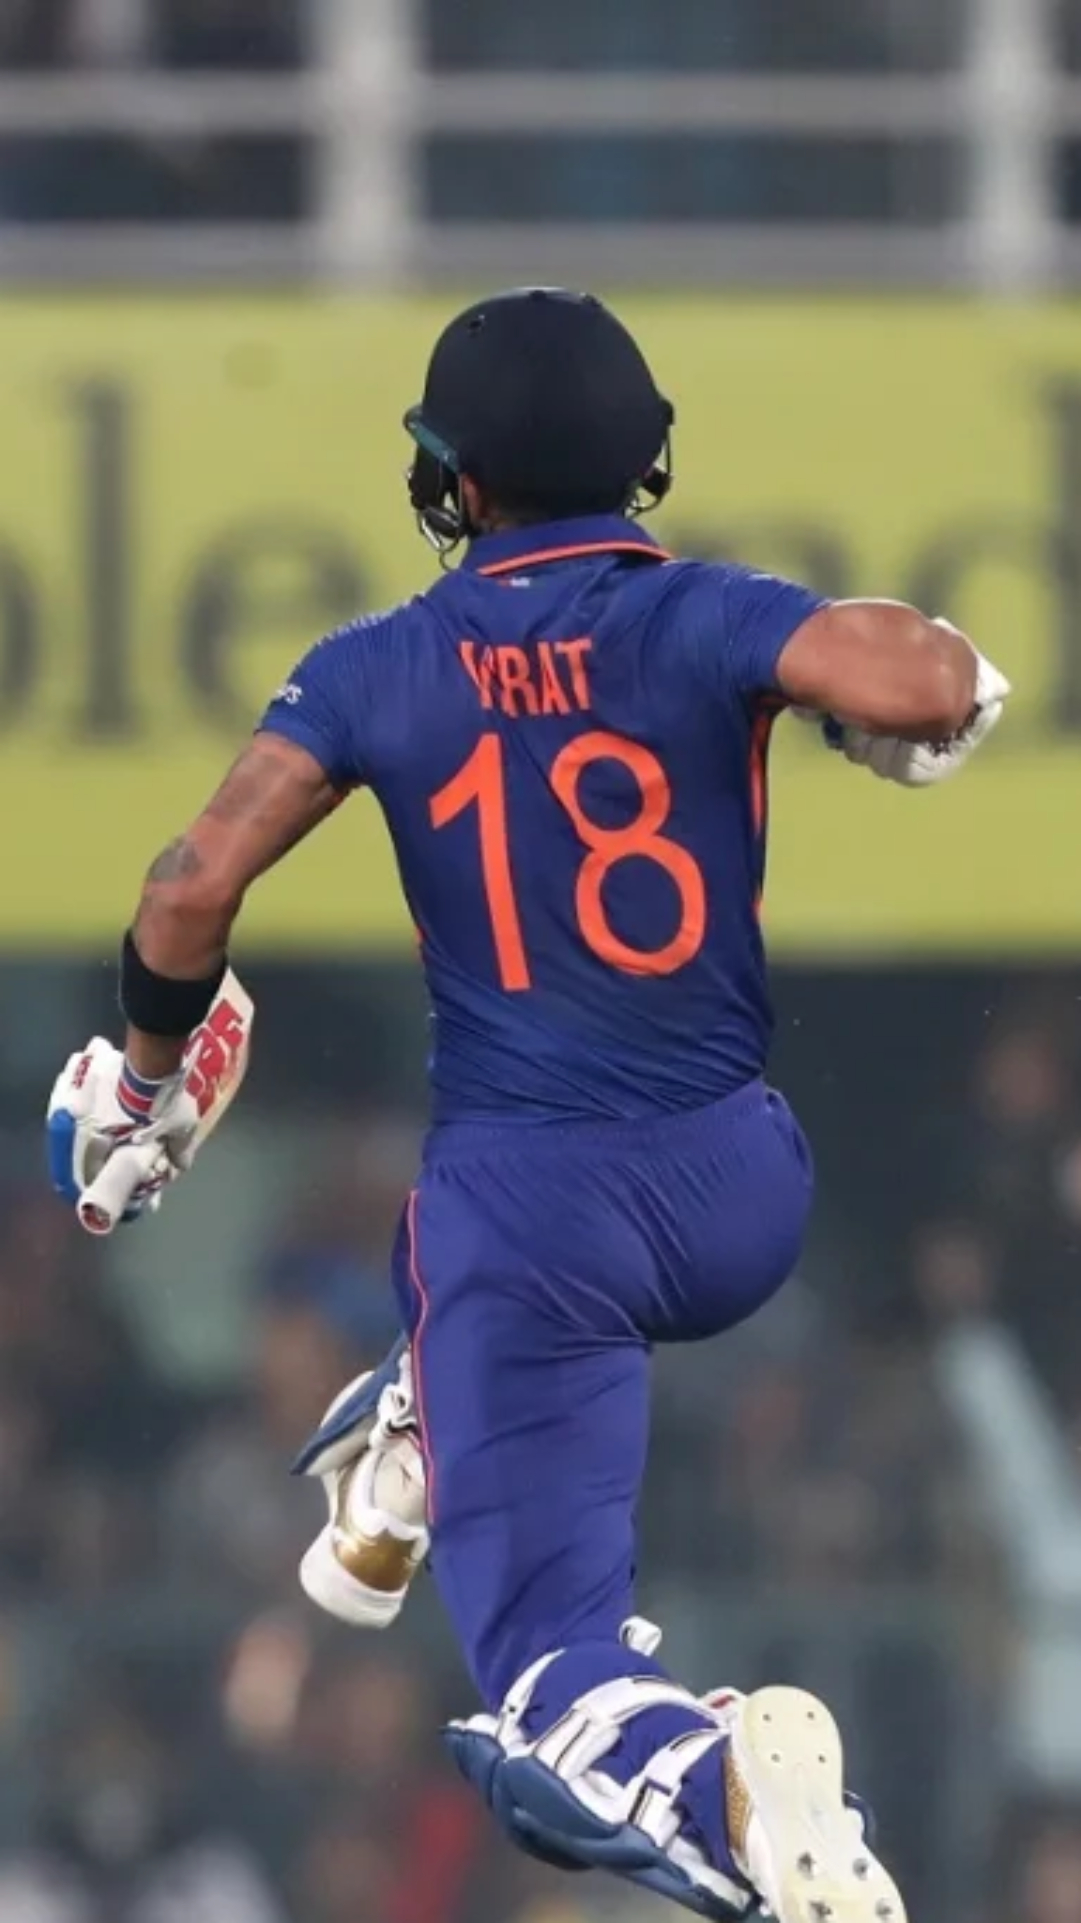 Virat Kohli's phenomenal ODI numbers against Australia